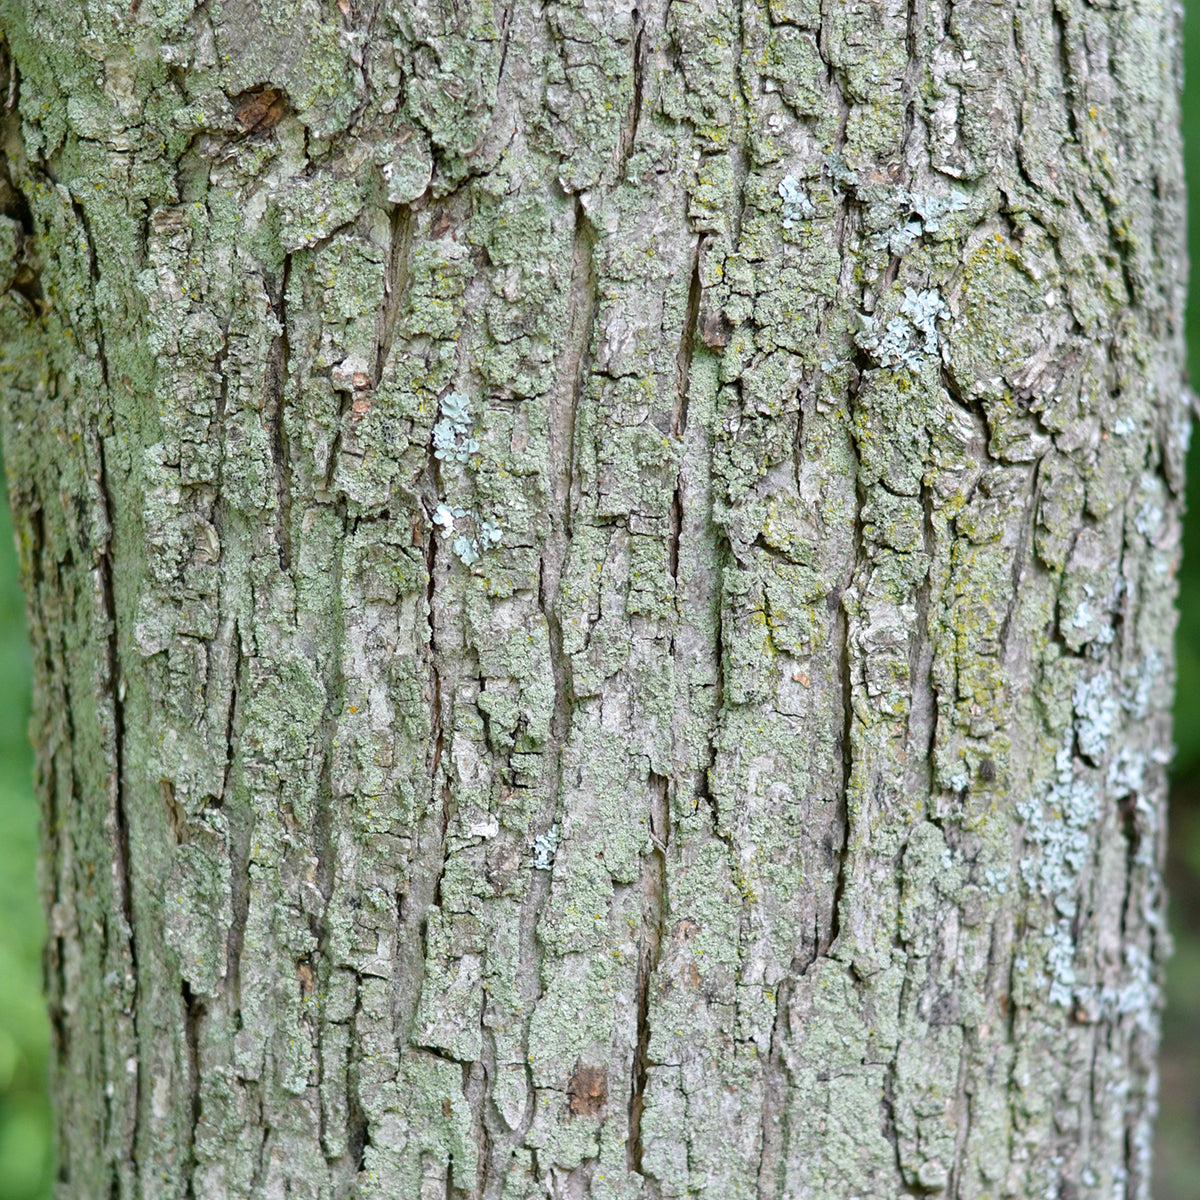 Silver Maple - Acer saccharinum